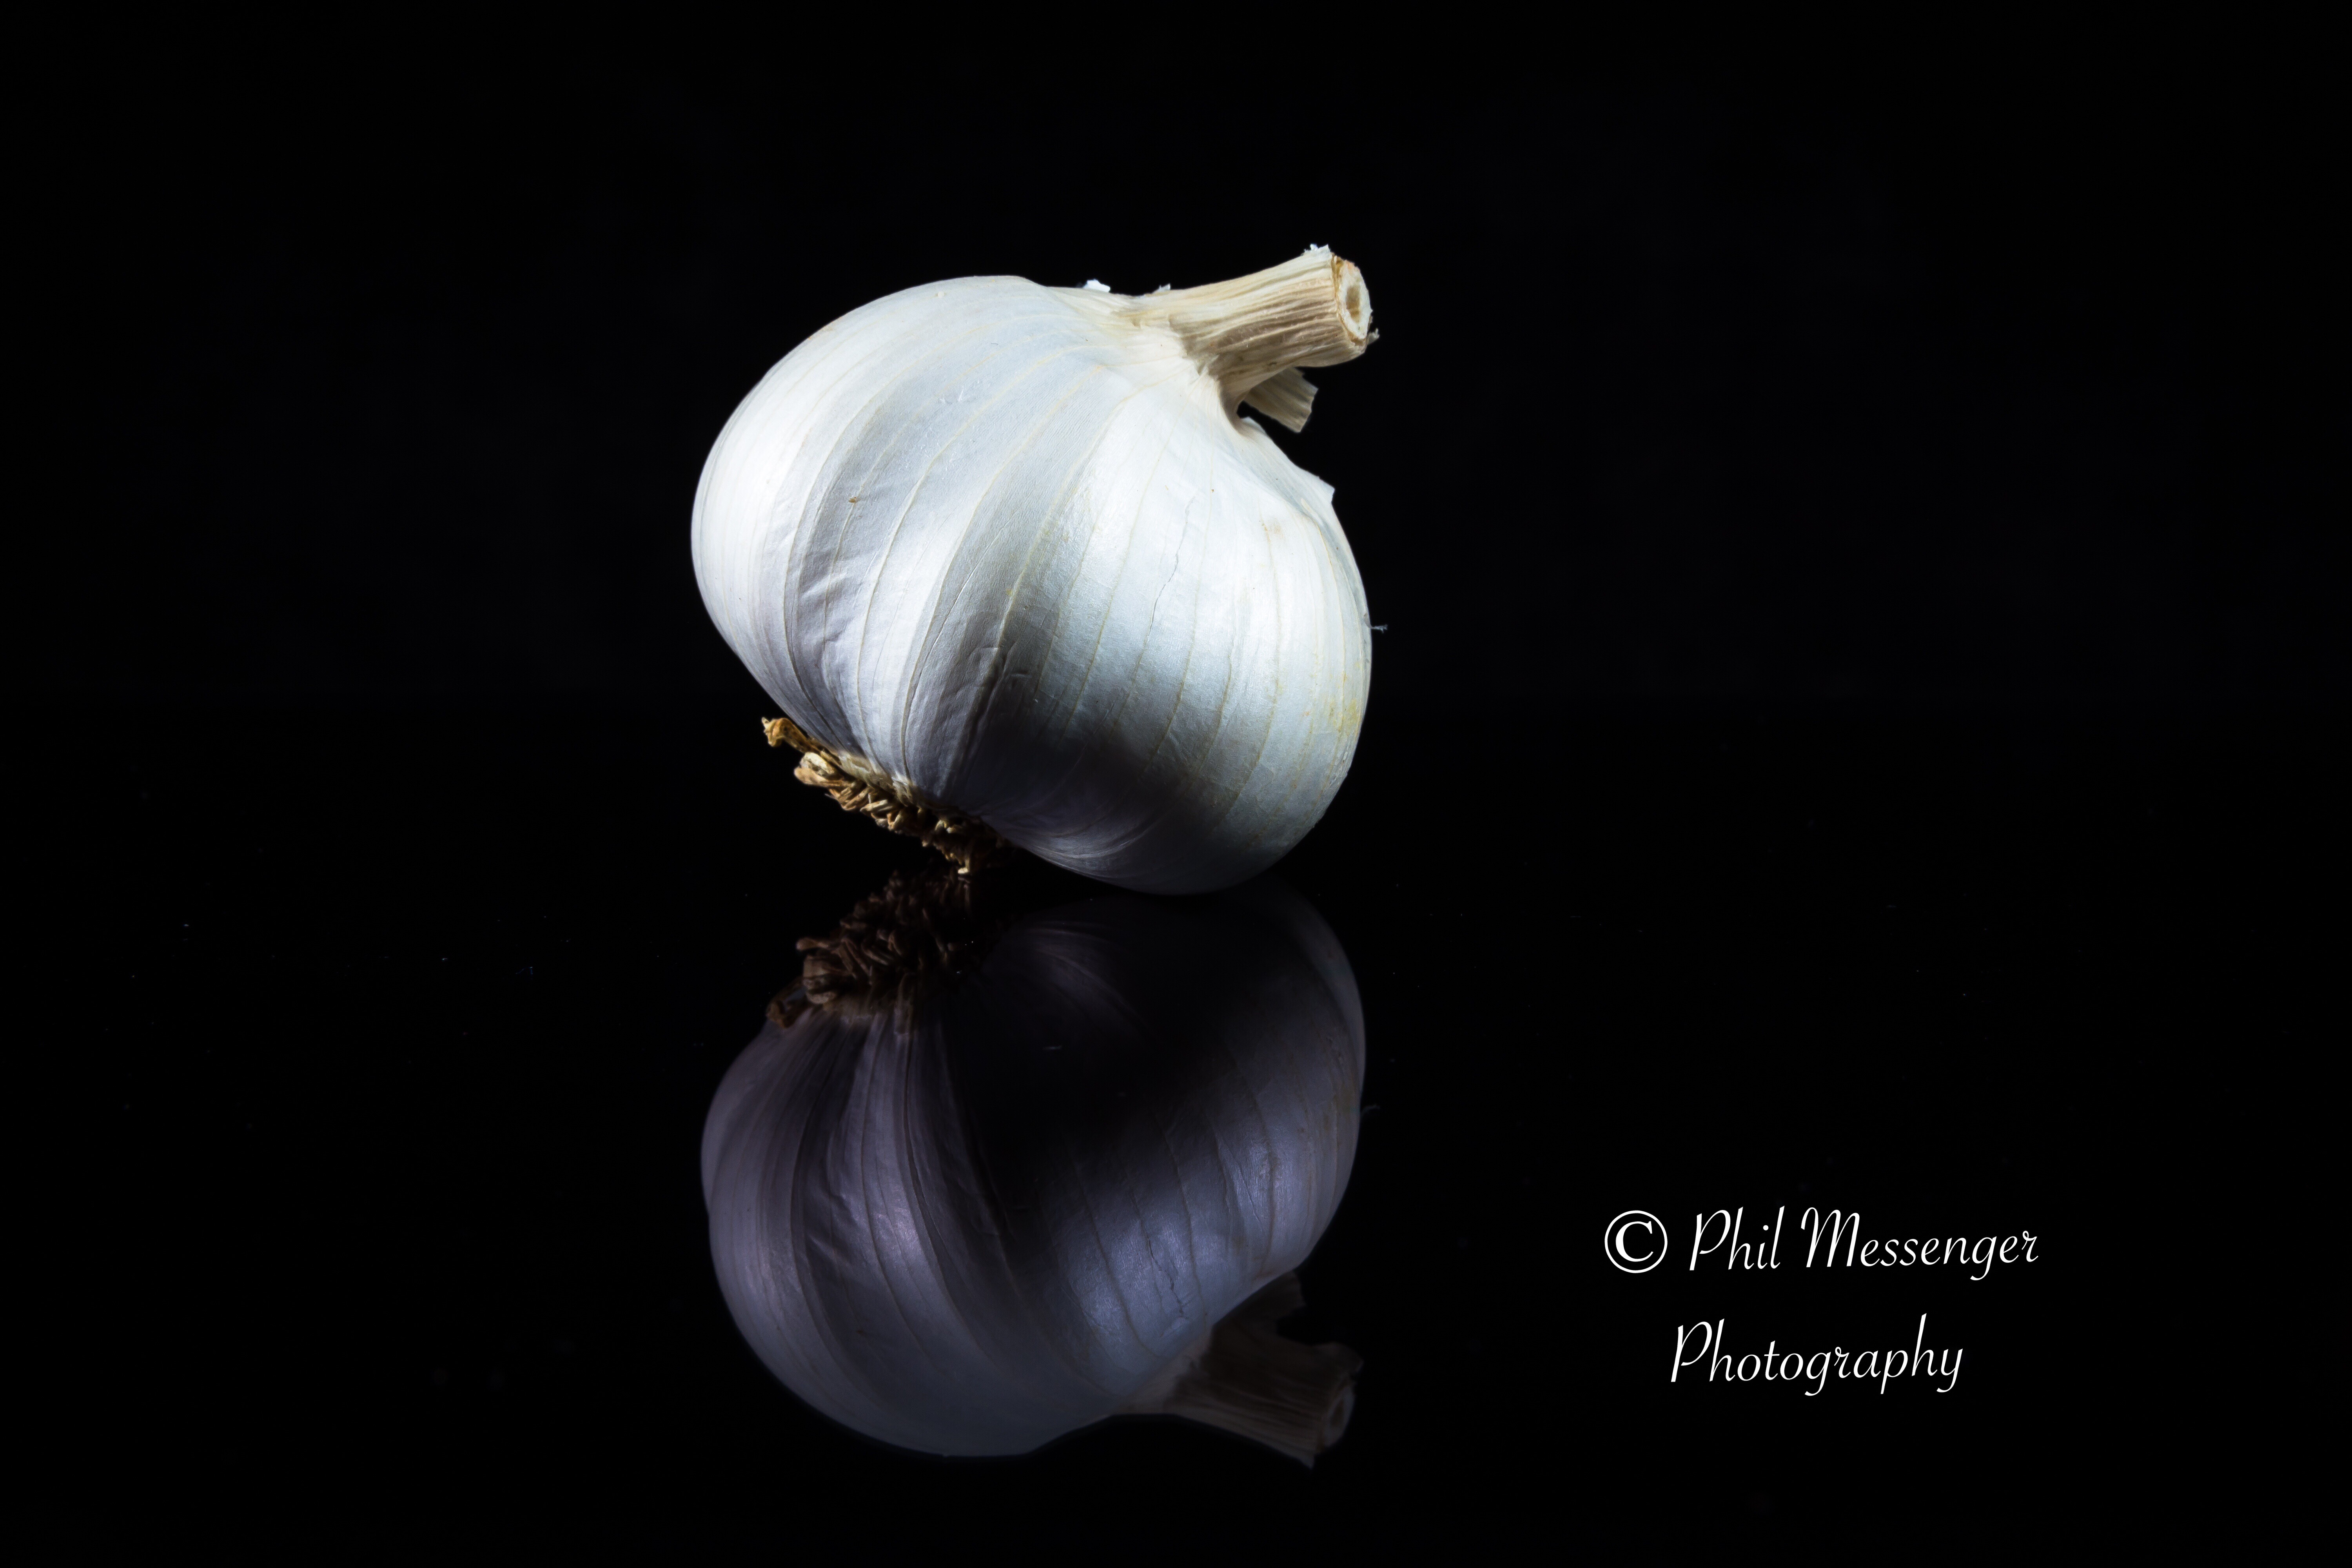 Garlic bulb on black